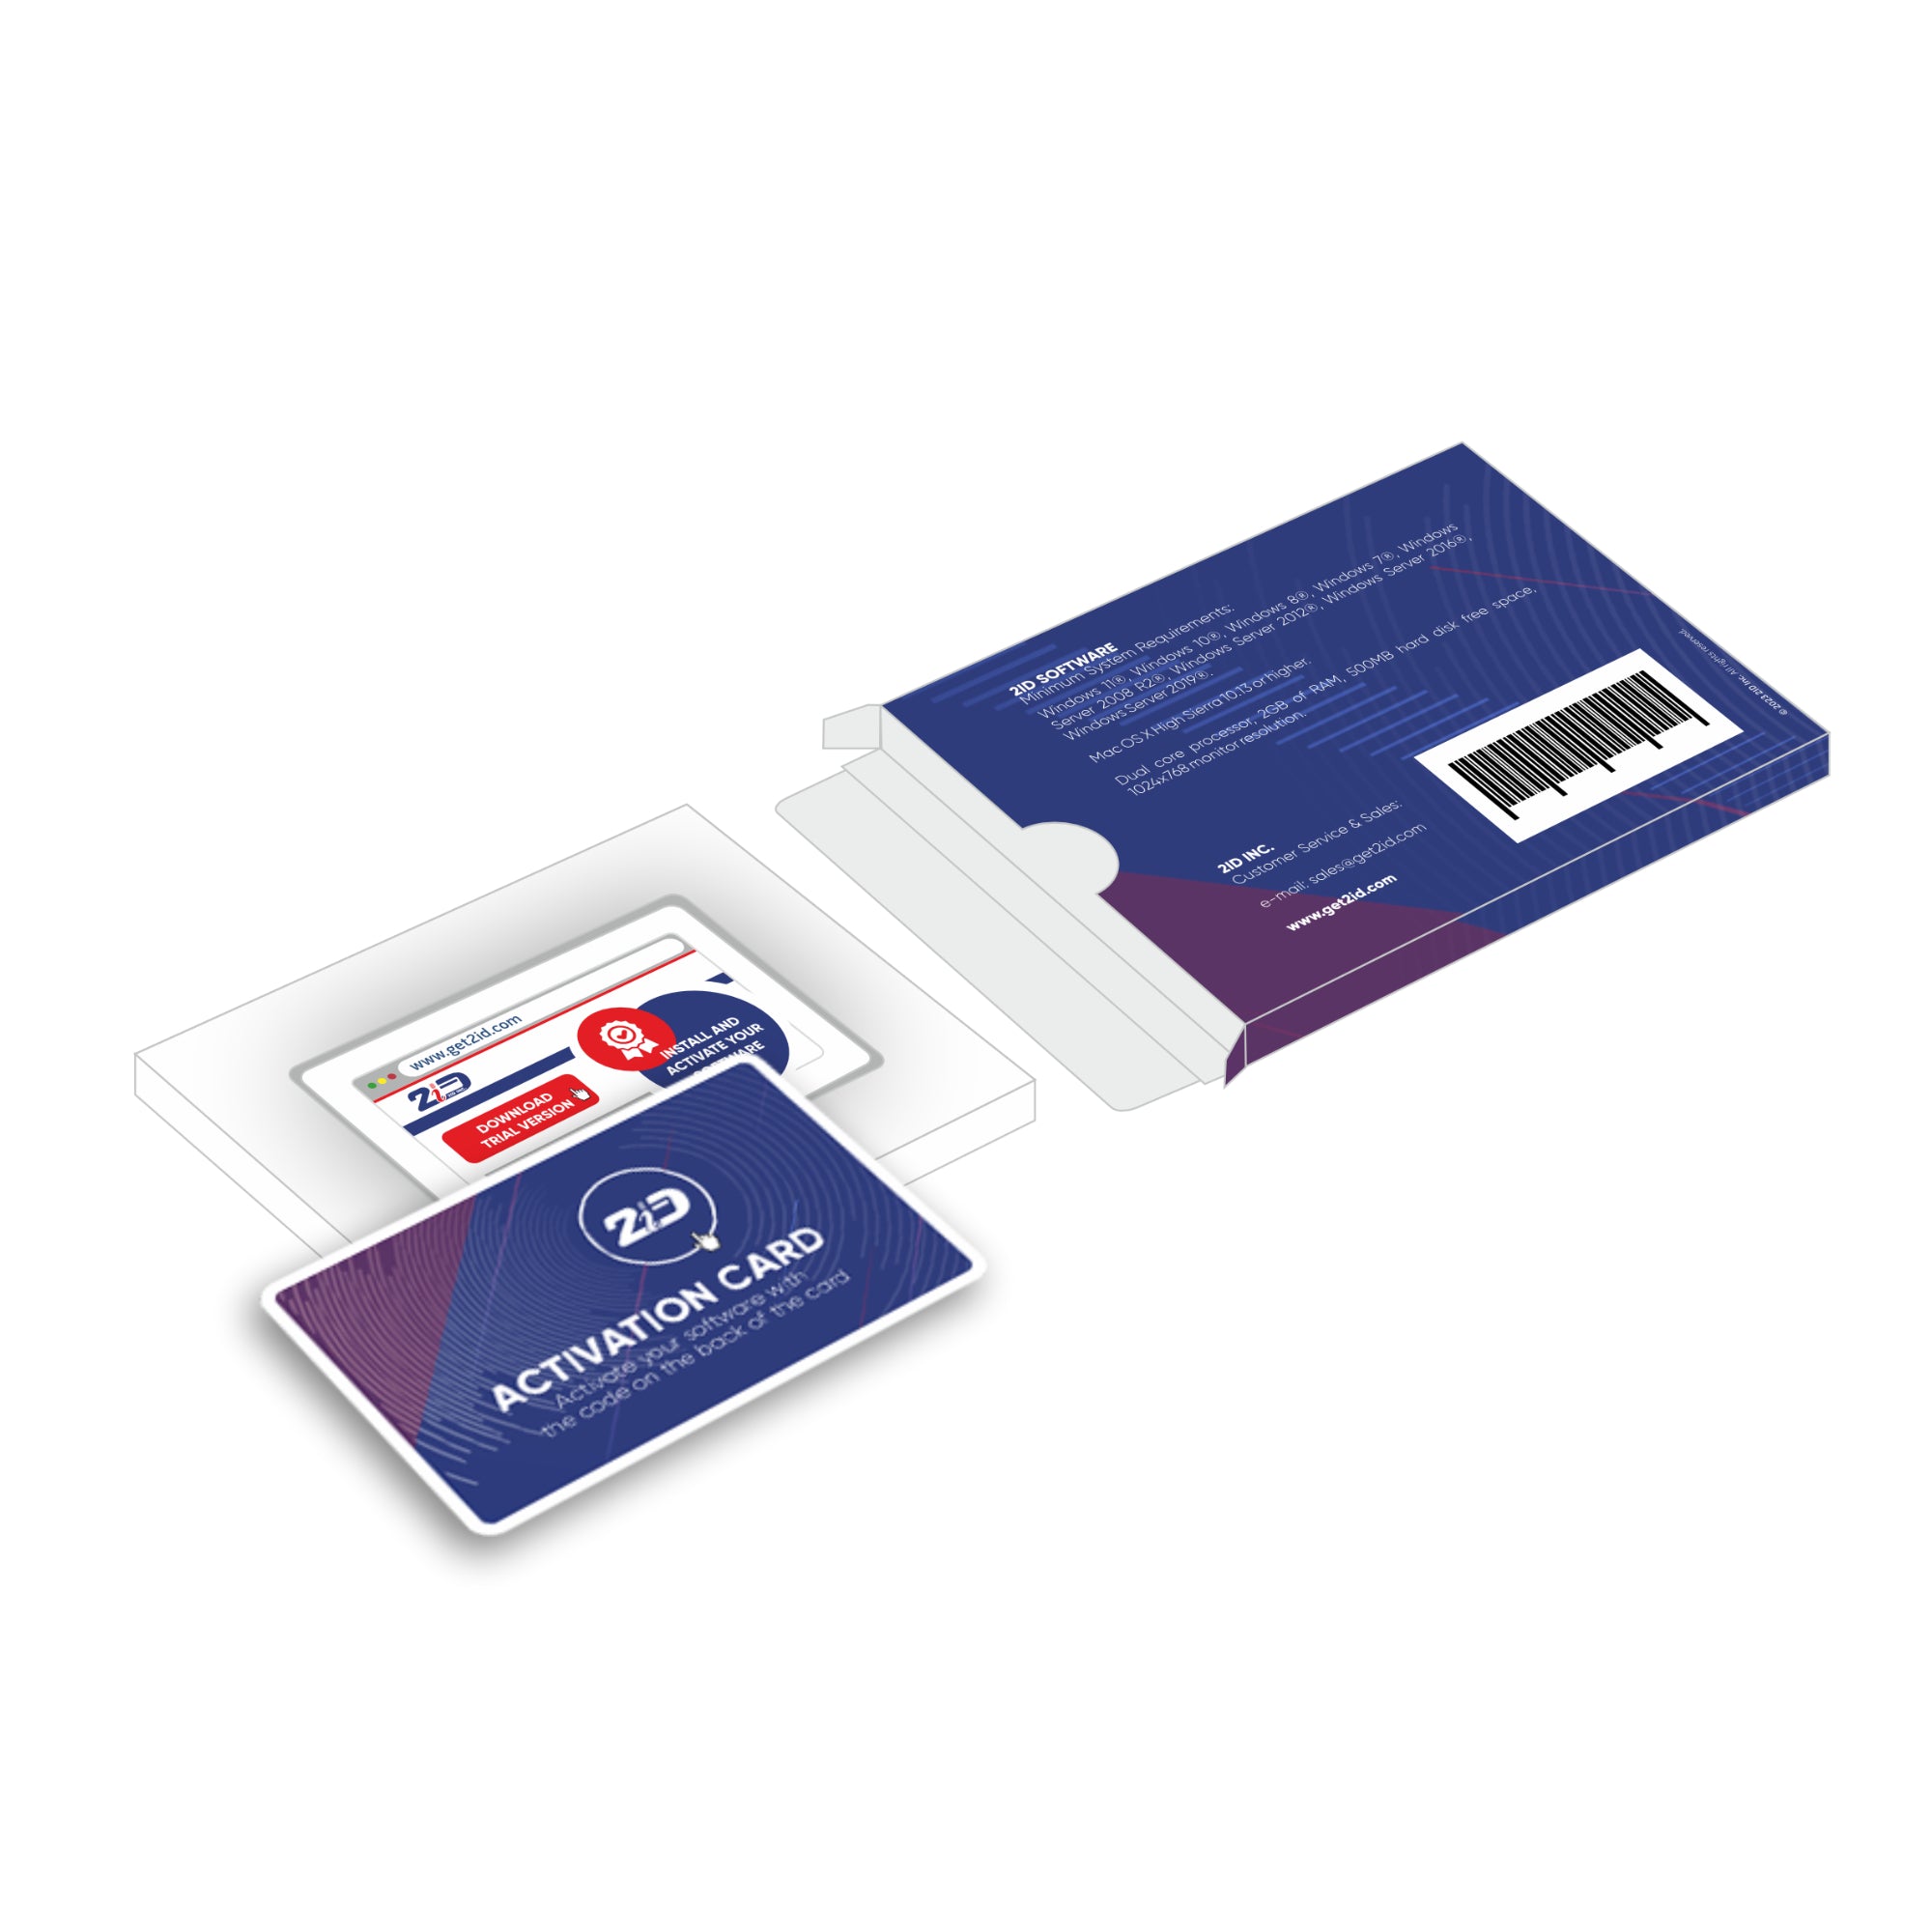 2ID Card Software - Enterprise Edition (Upgrade Code)